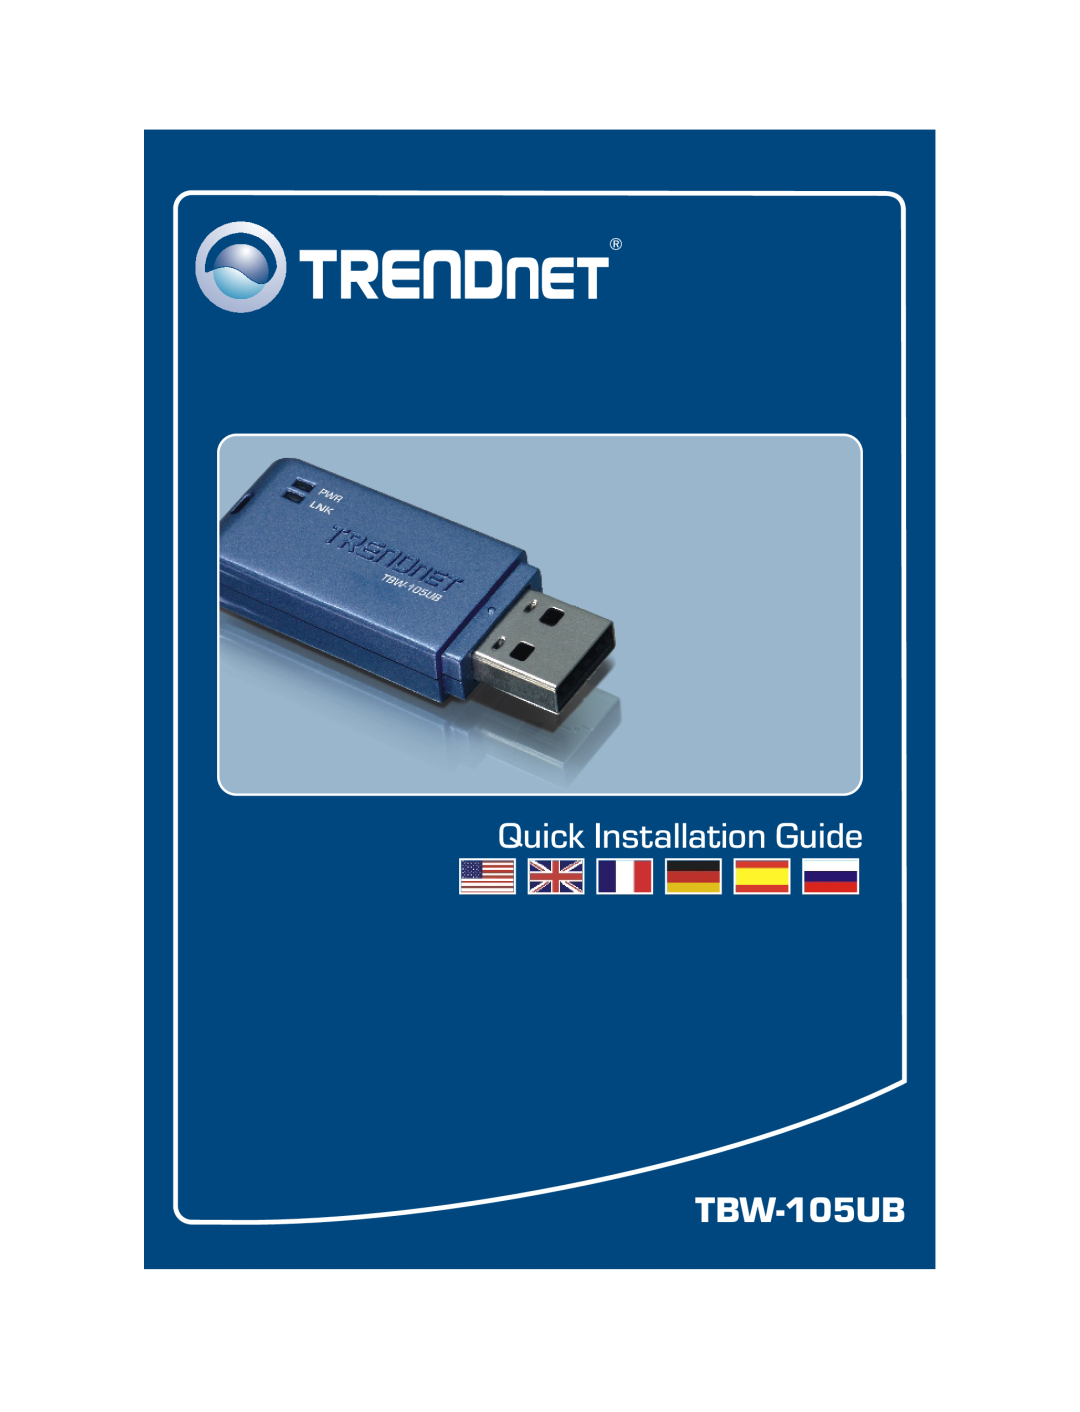 TRENDnet TBW-105UB manual Quick Installation Guide 